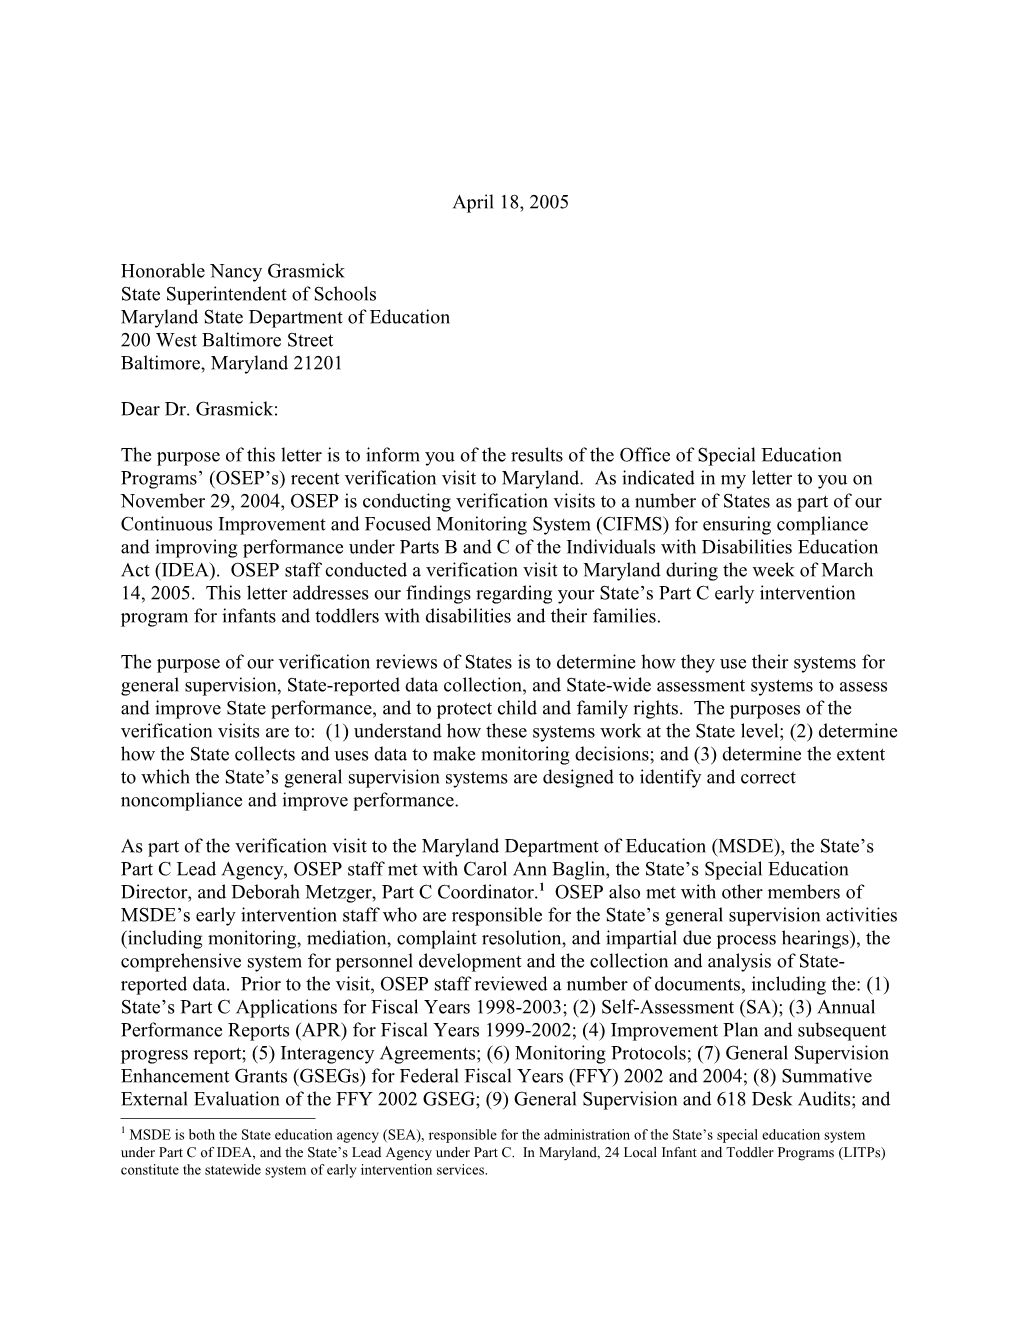 Maryland Part C Verification Visit Letter, Dated April 18, 2005 (Msword)